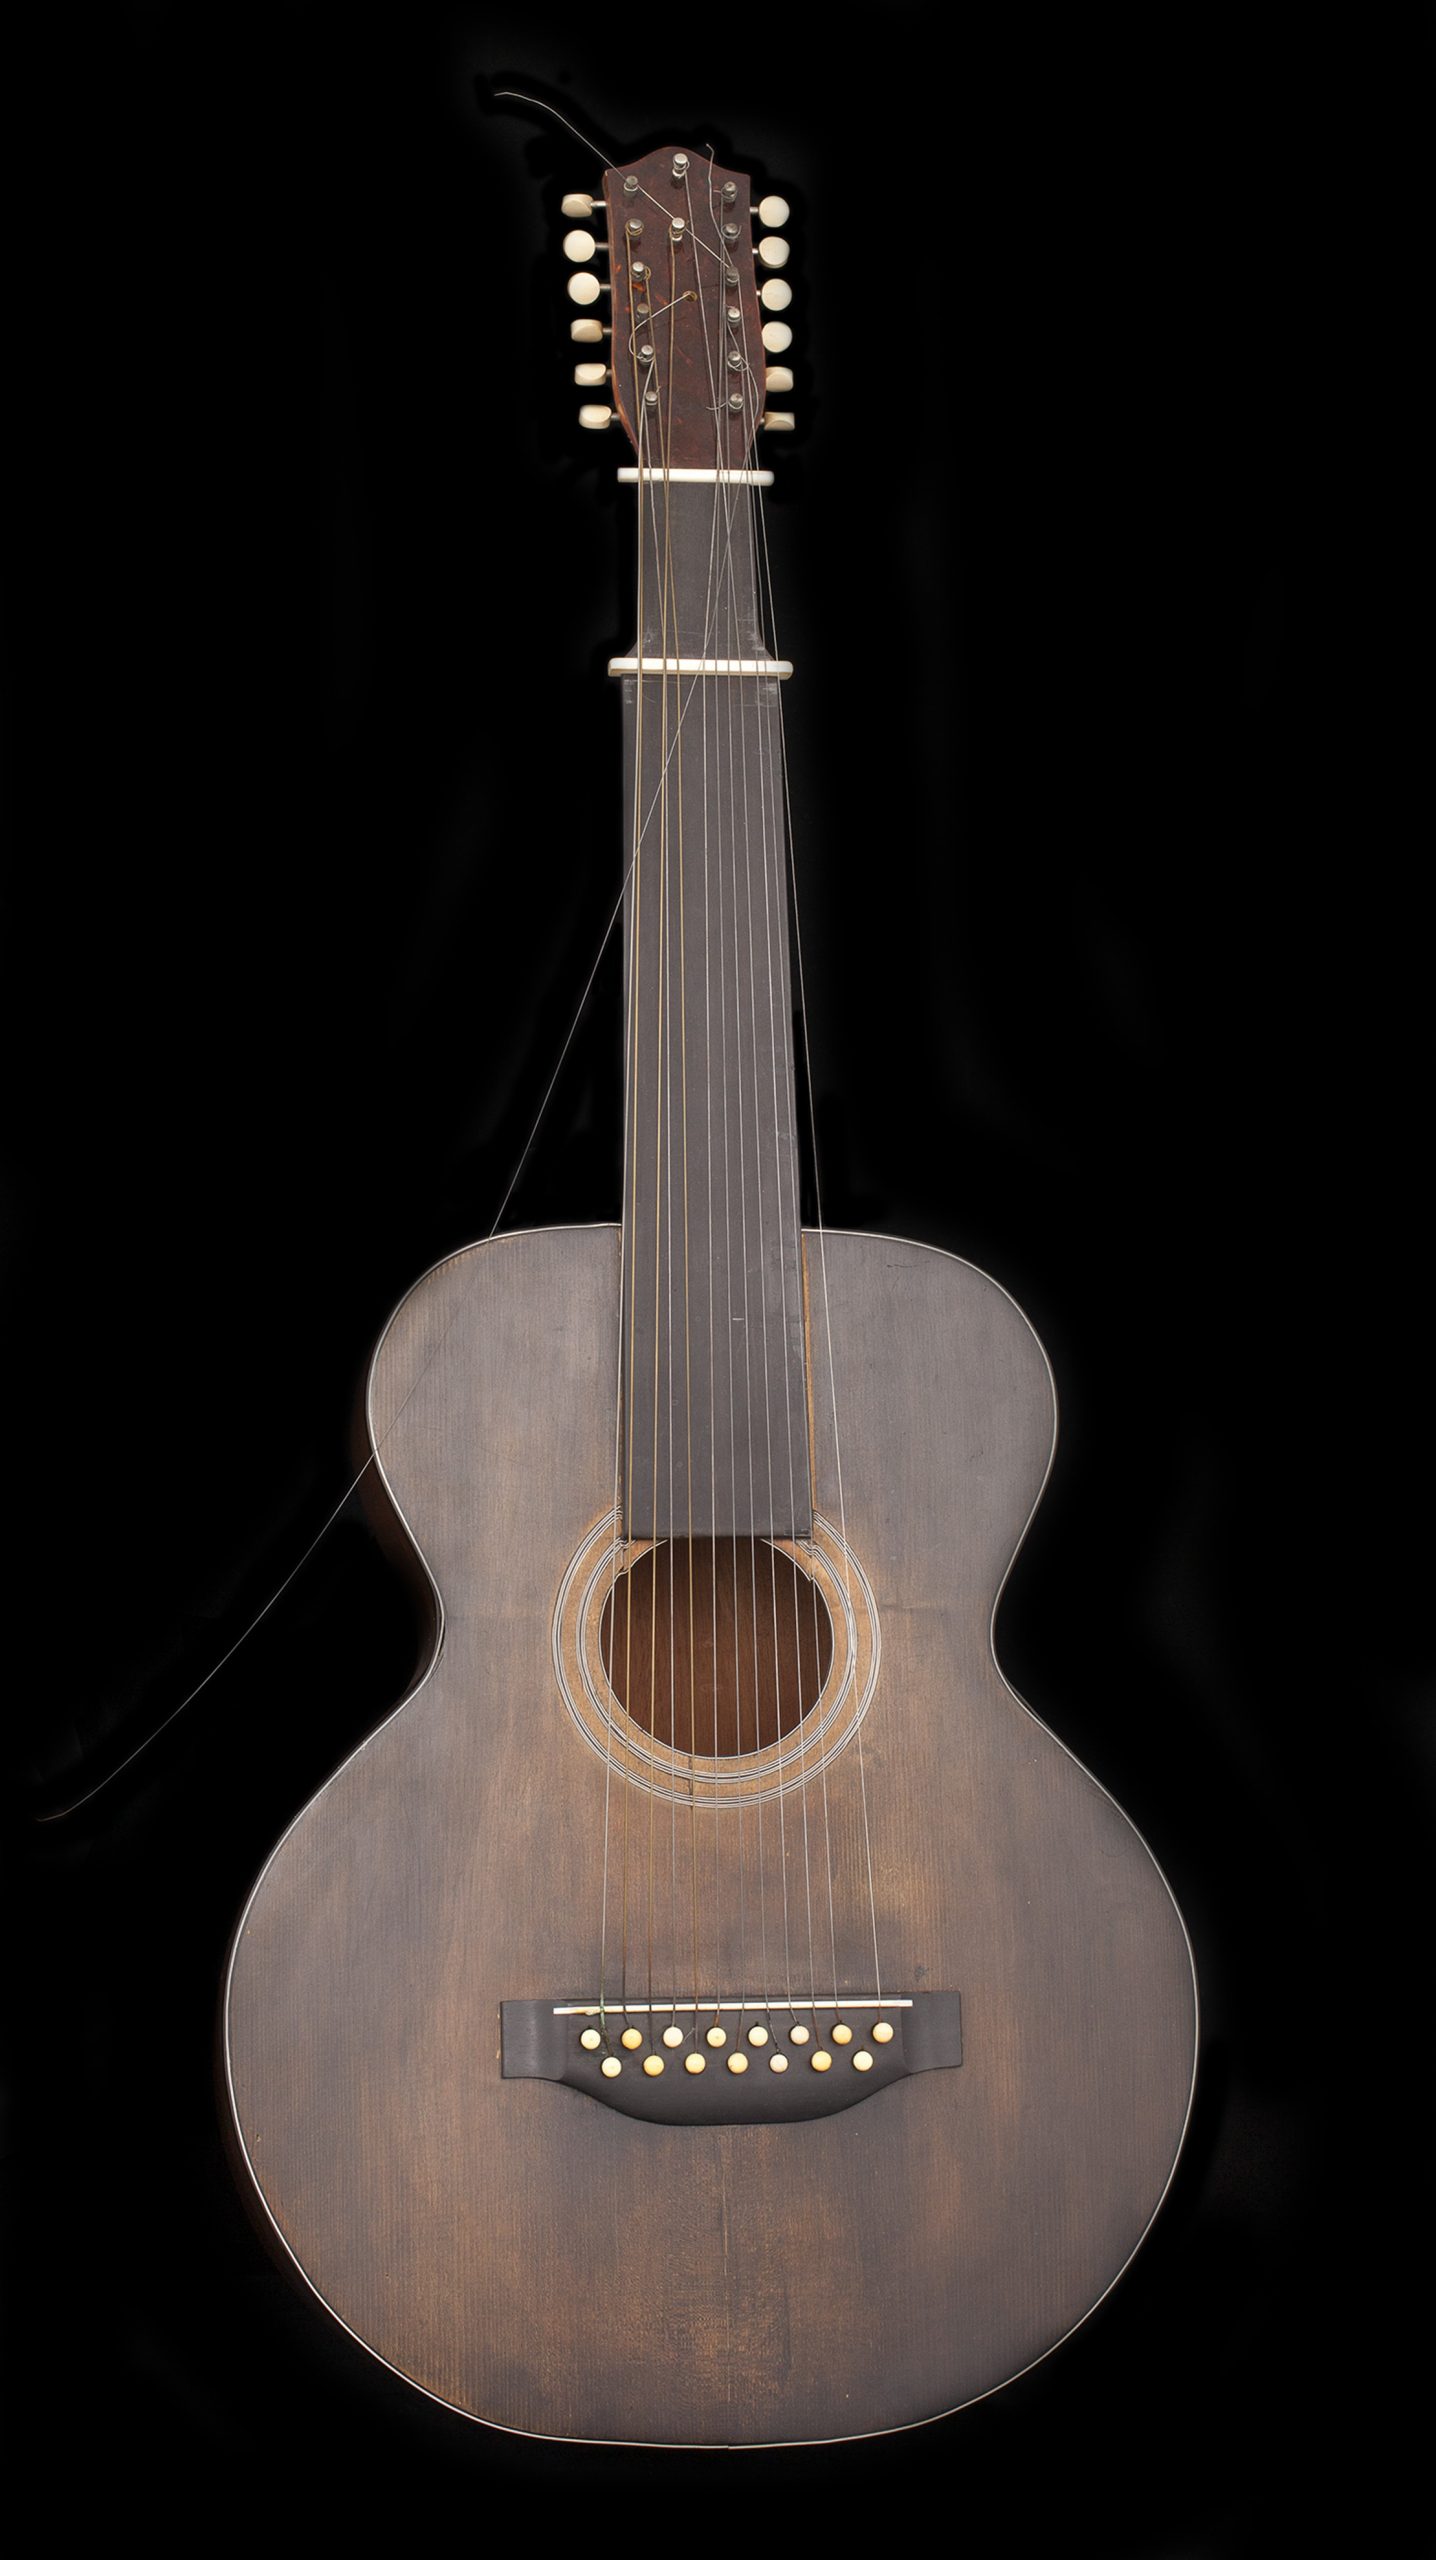 Oahu Jumbo 68B model acoustic guitar